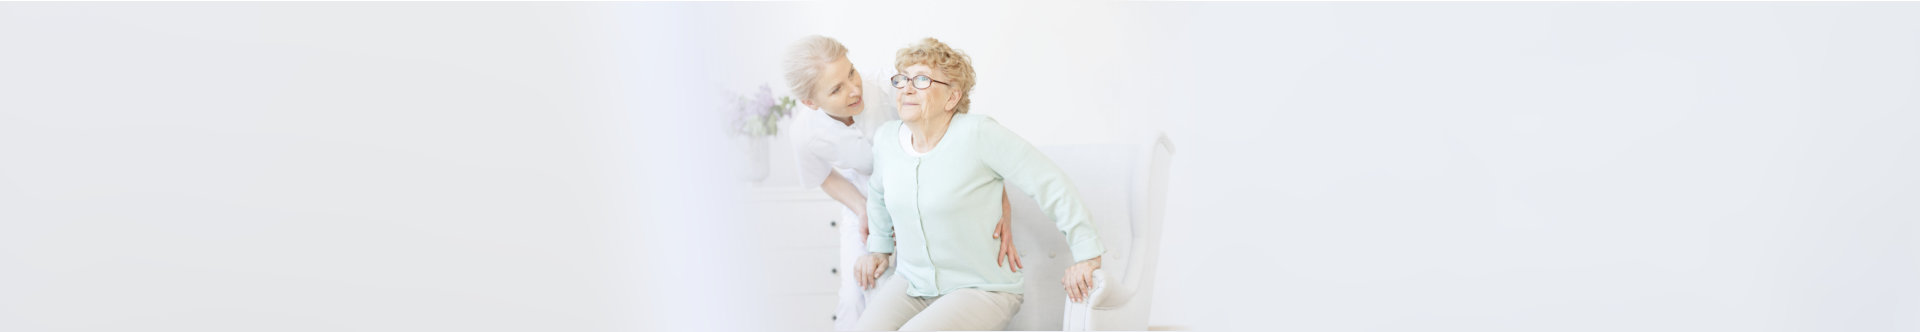 caregiver assisting a senior patient